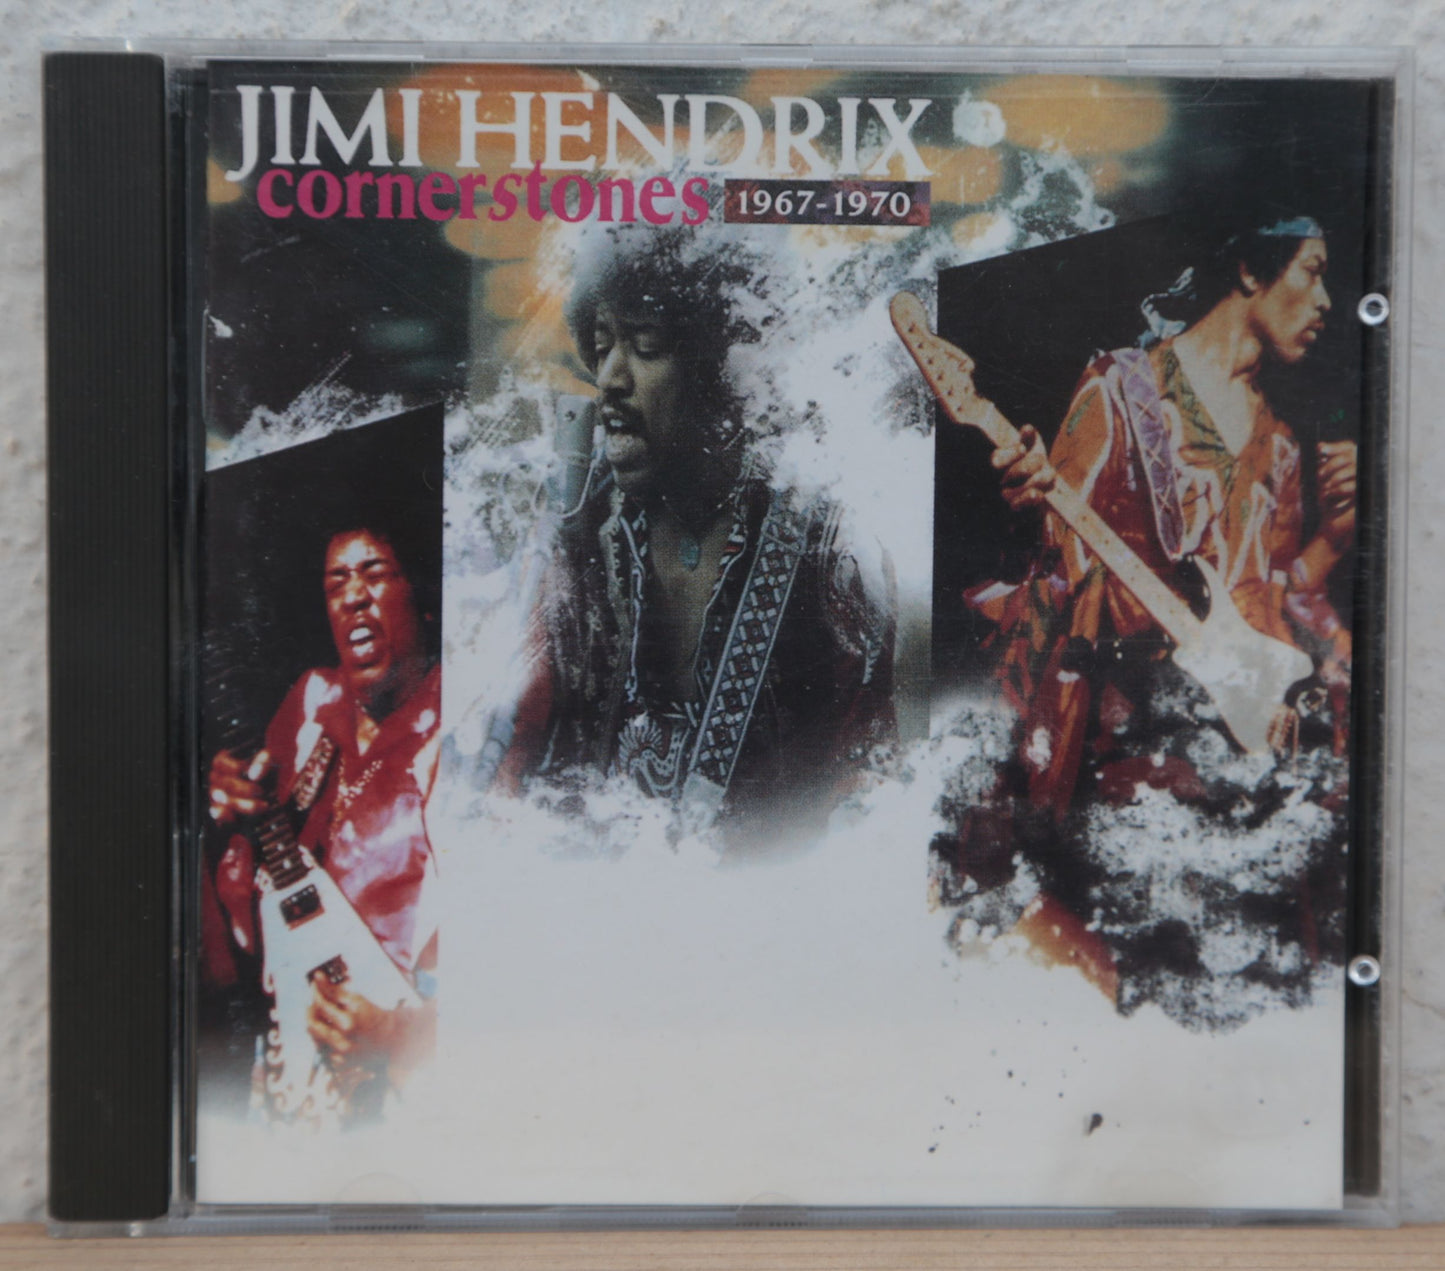 Jimi Hendrix - Cornerstone 1967-1970 (cd)